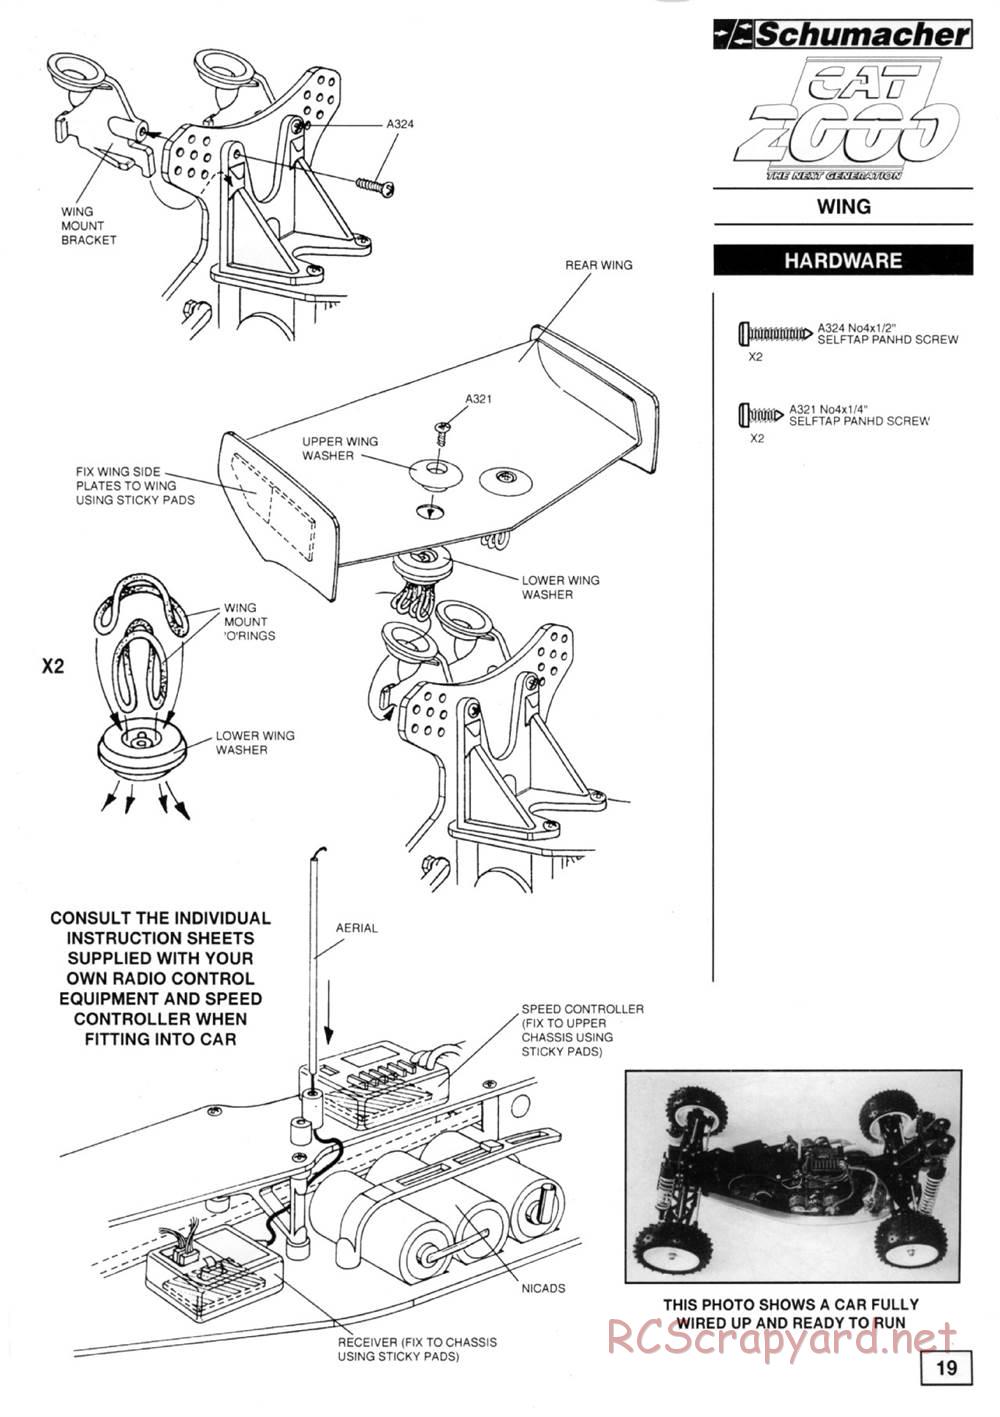 Schumacher - Cat 2000 - Manual - Page 25